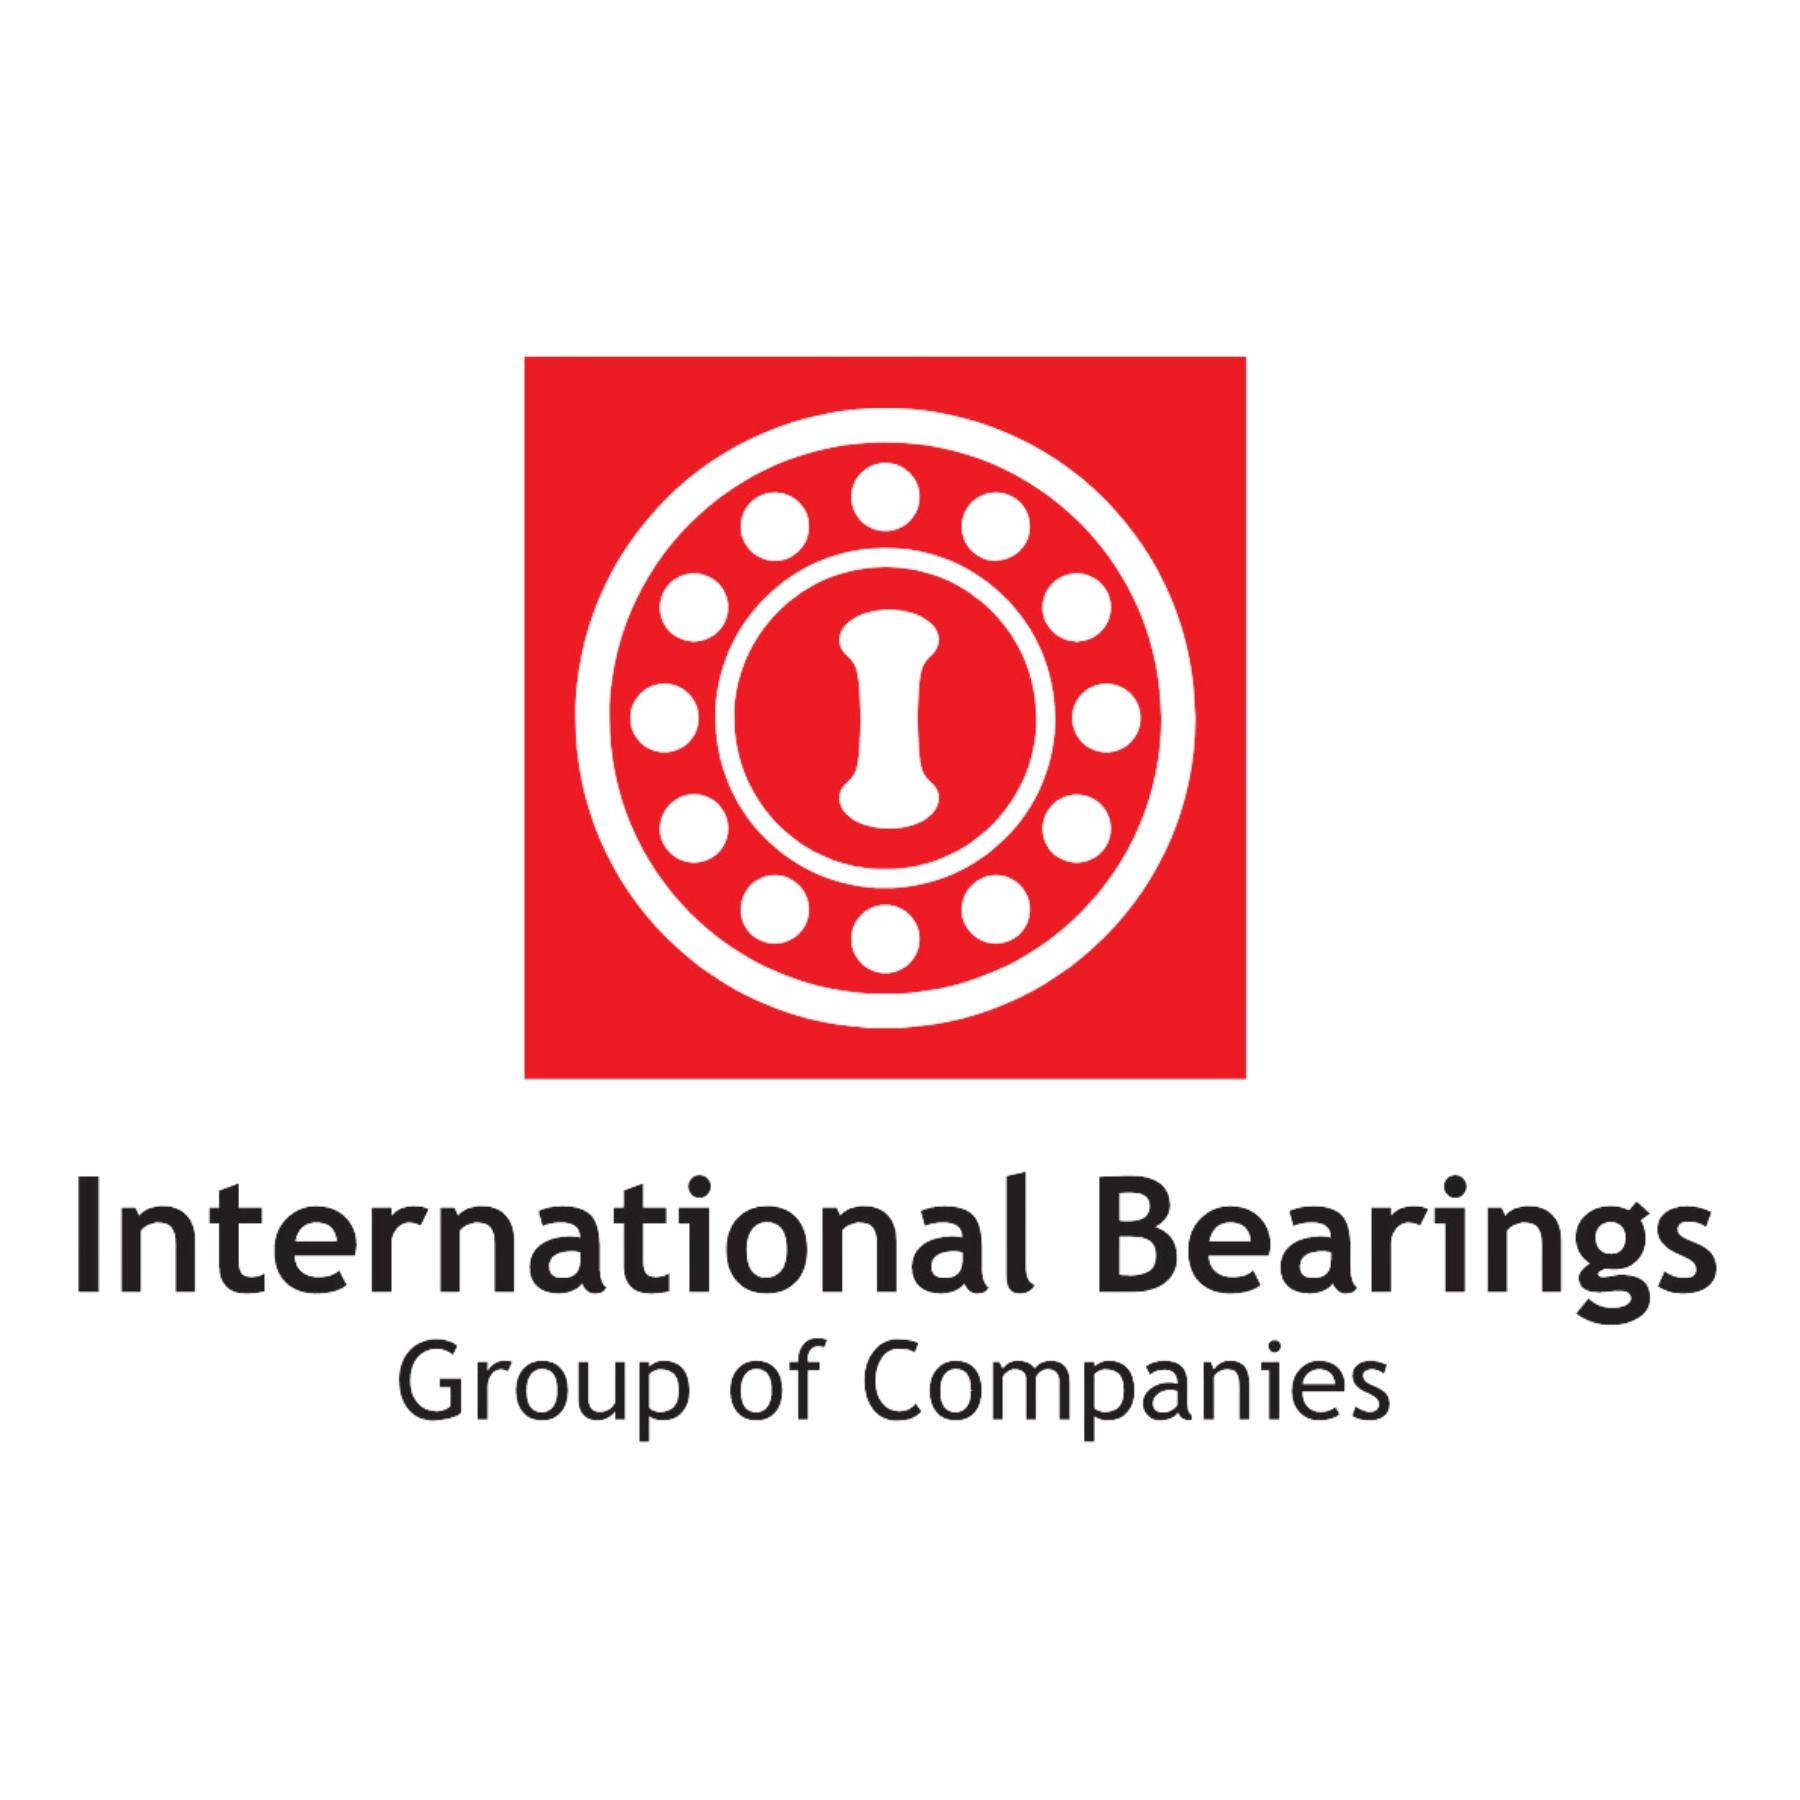 International Bearings